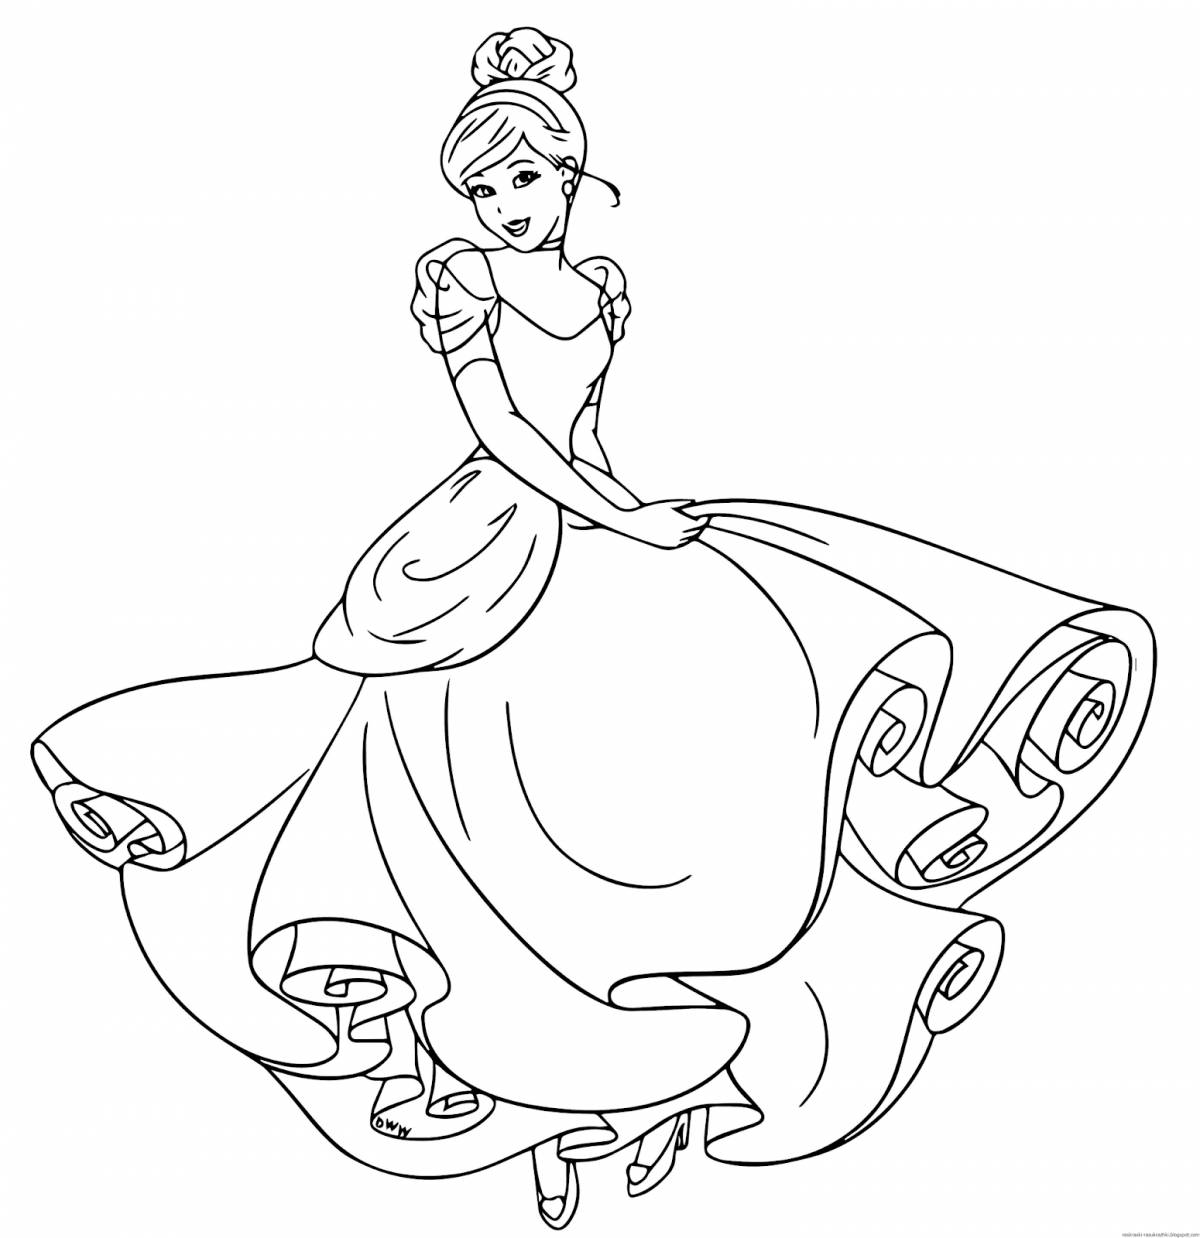 Dazzling Cinderella coloring book for kids